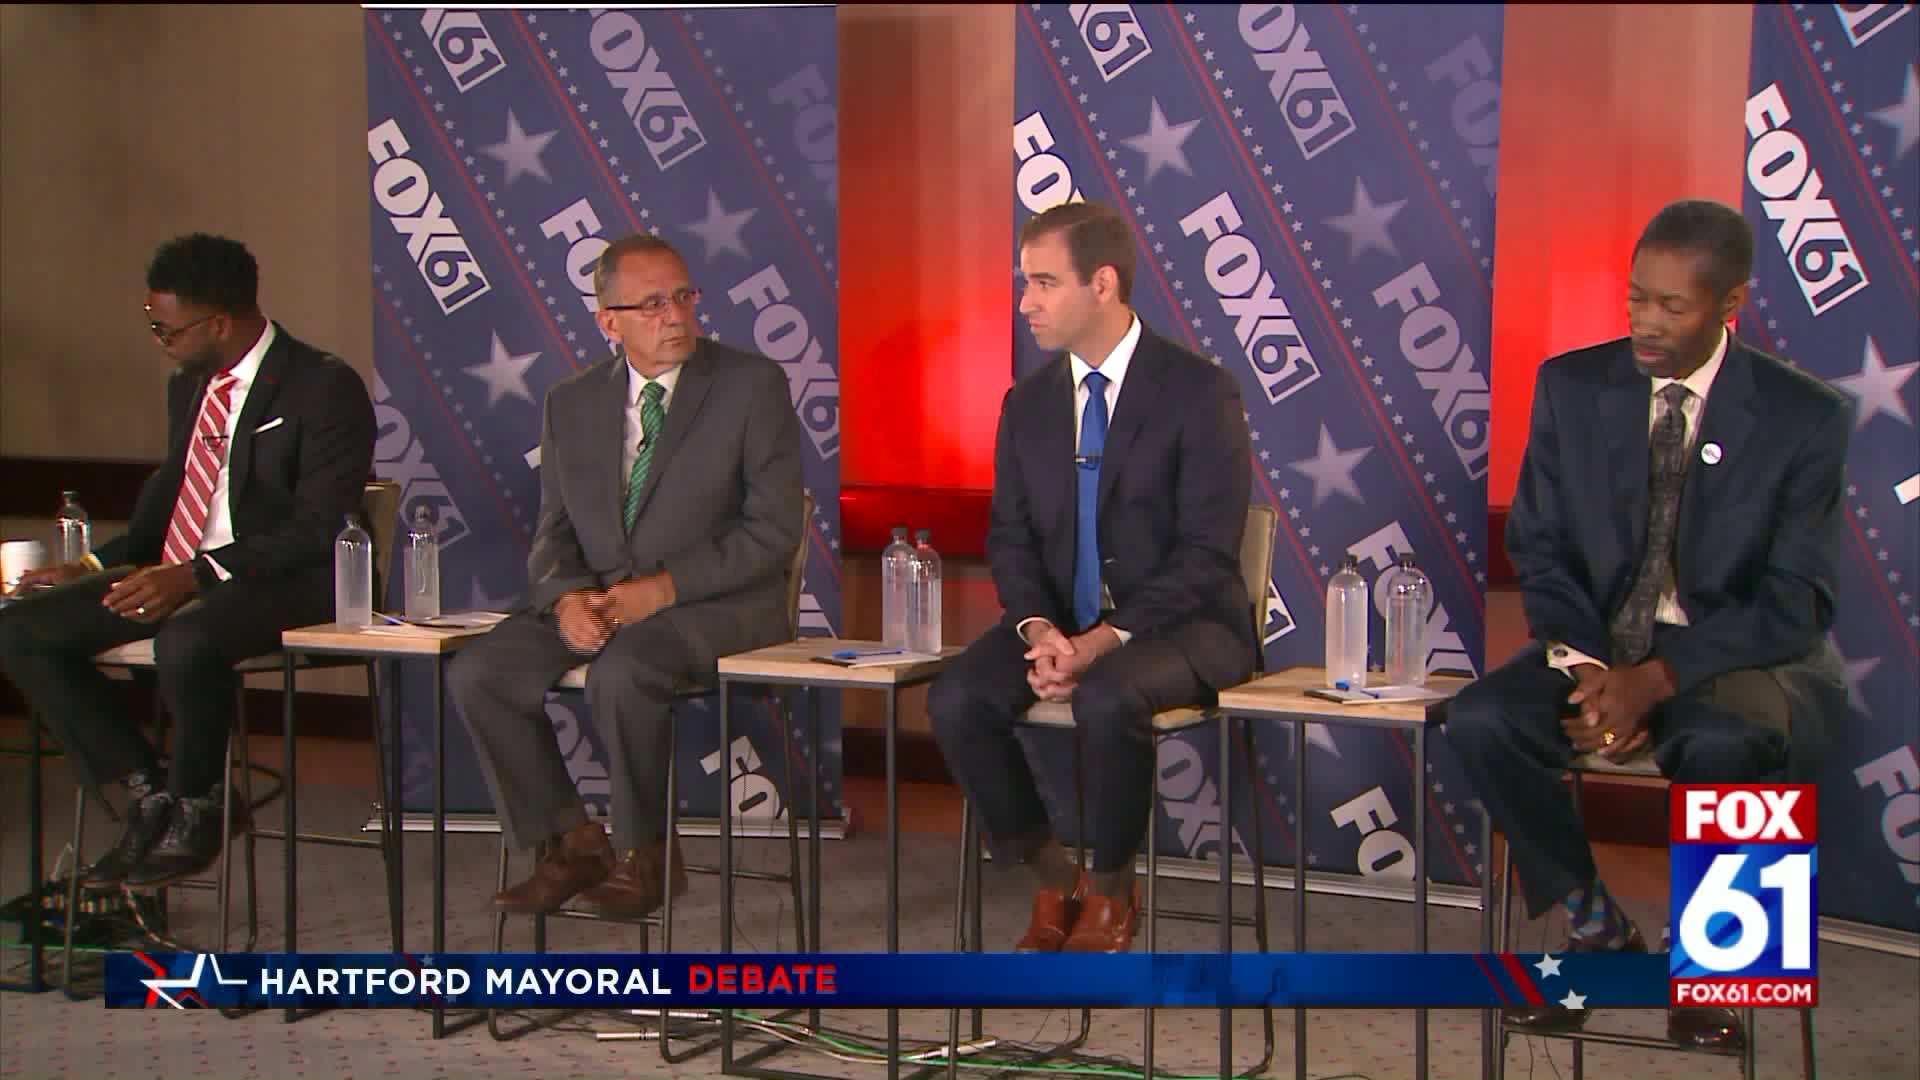 Hartford Mayoral Debate: Property Tax Rate